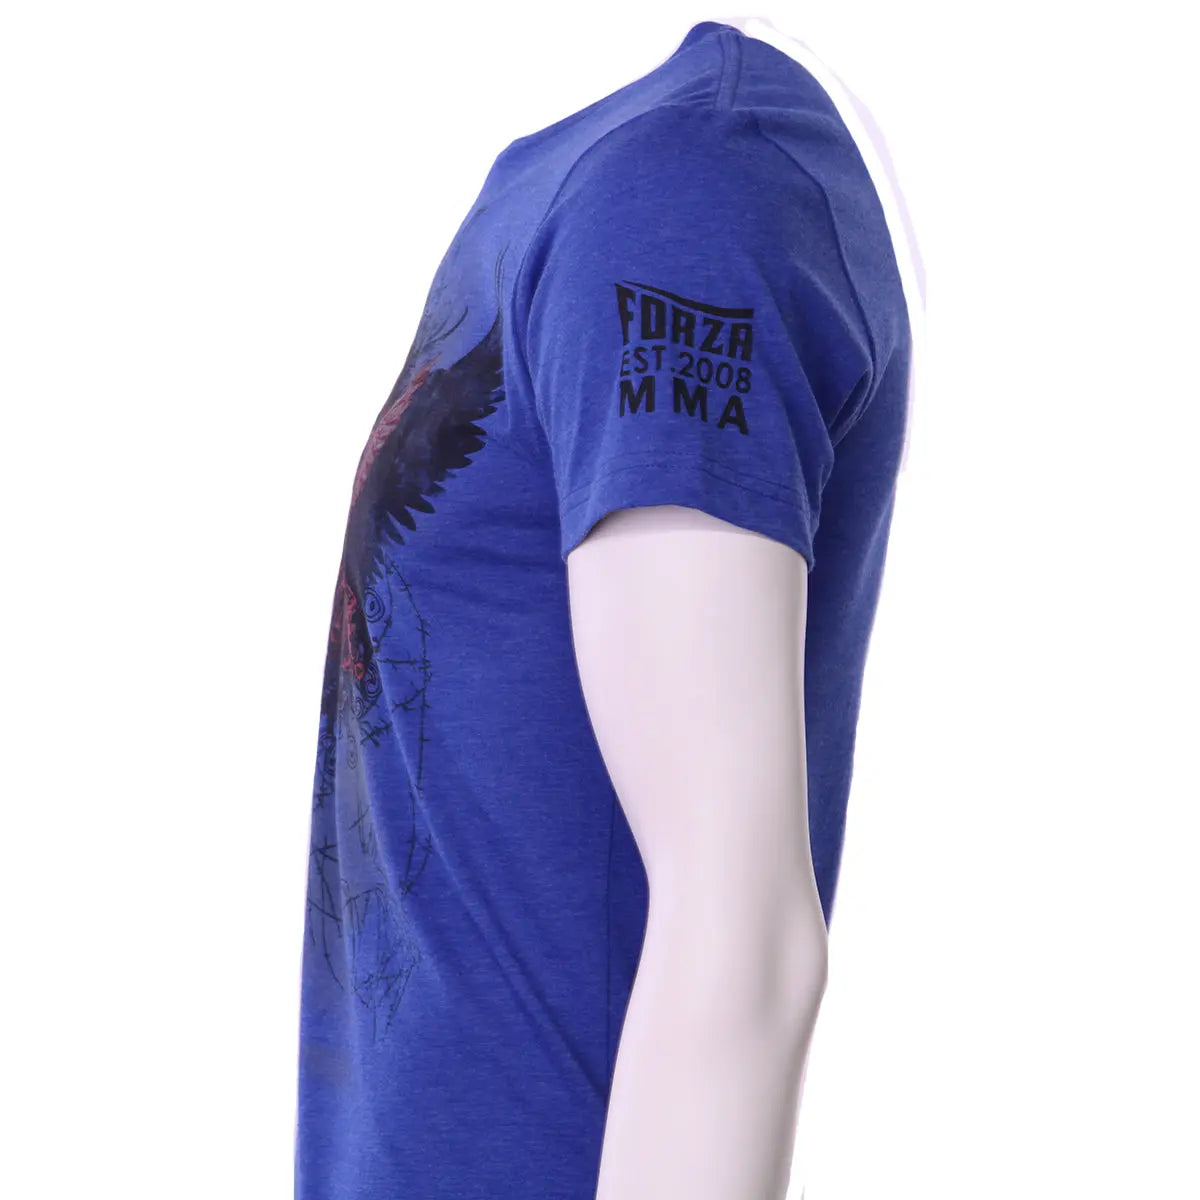 Forza Sports "Soar" MMA T-Shirt - Royal Blue Forza Sports